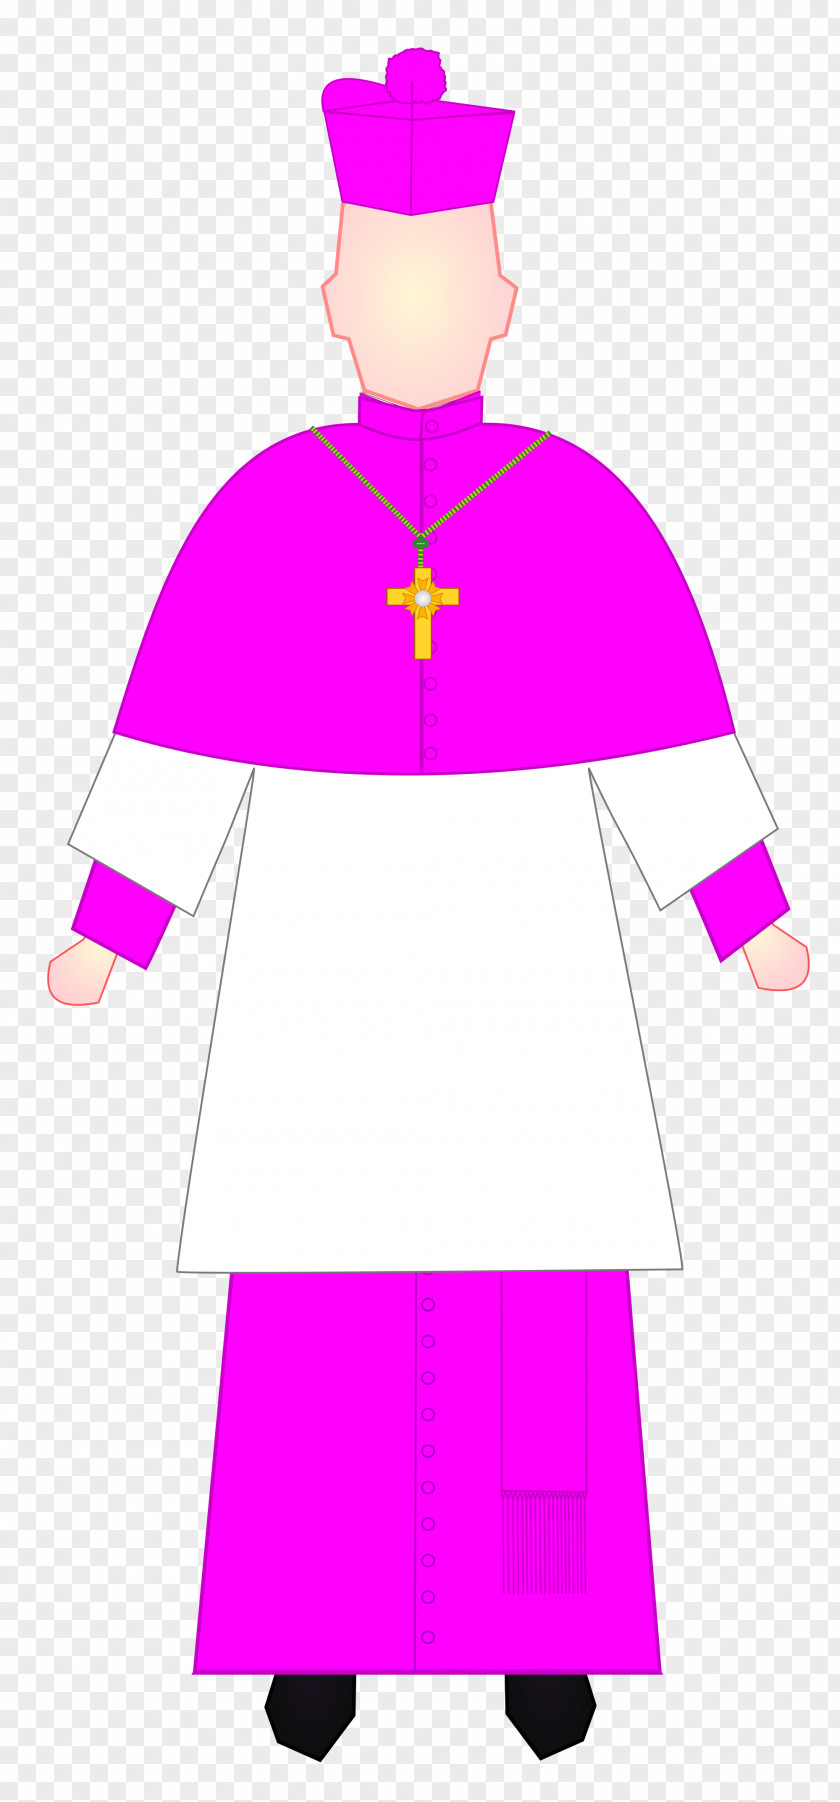 Dress Choir Bishop Priest Cassock Cardinal PNG